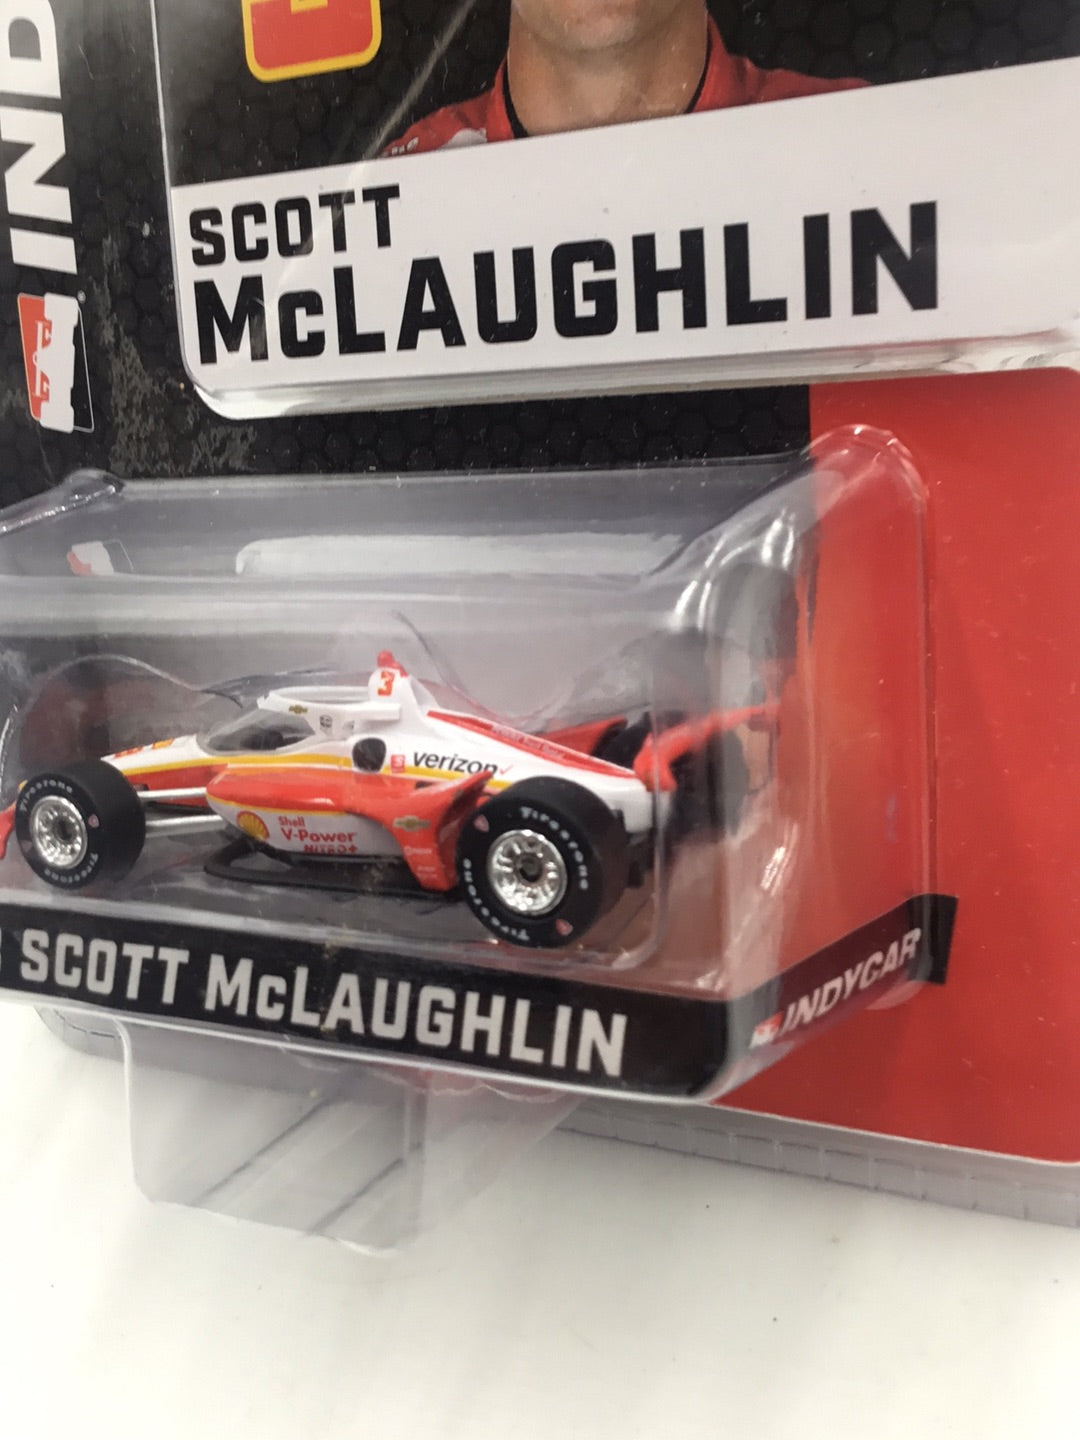 Greenlight 2021 IndyCar Series #3 Scott McLaughlin 1/64